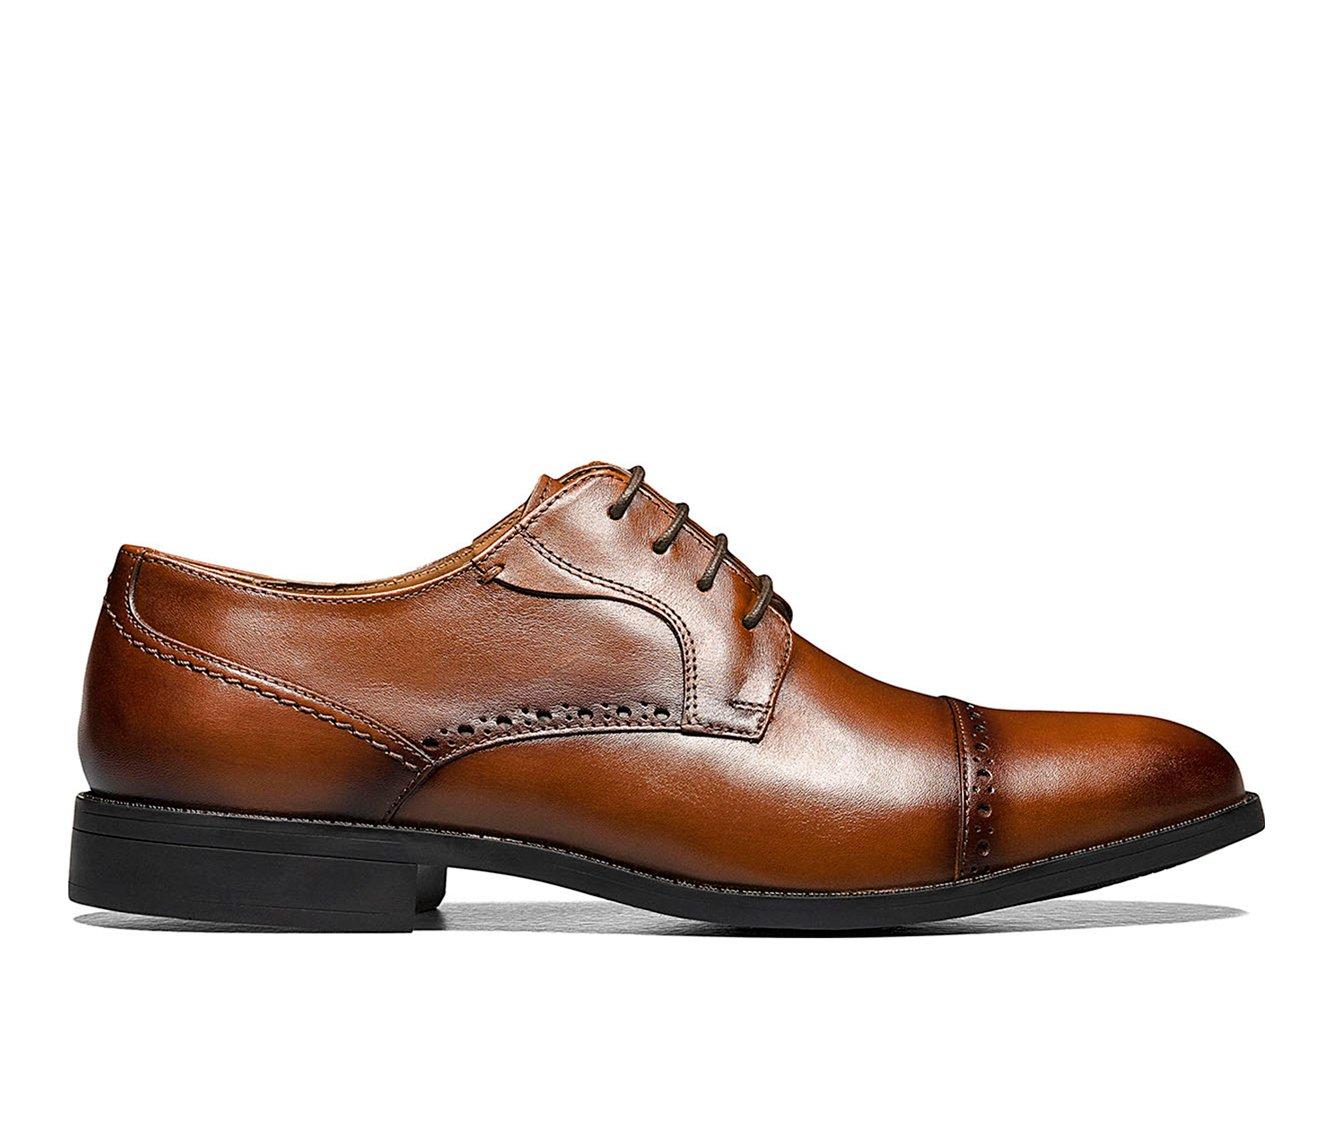 Men's Dress Shoes & Boots, Loafers, Oxfords | Shoe Carnival